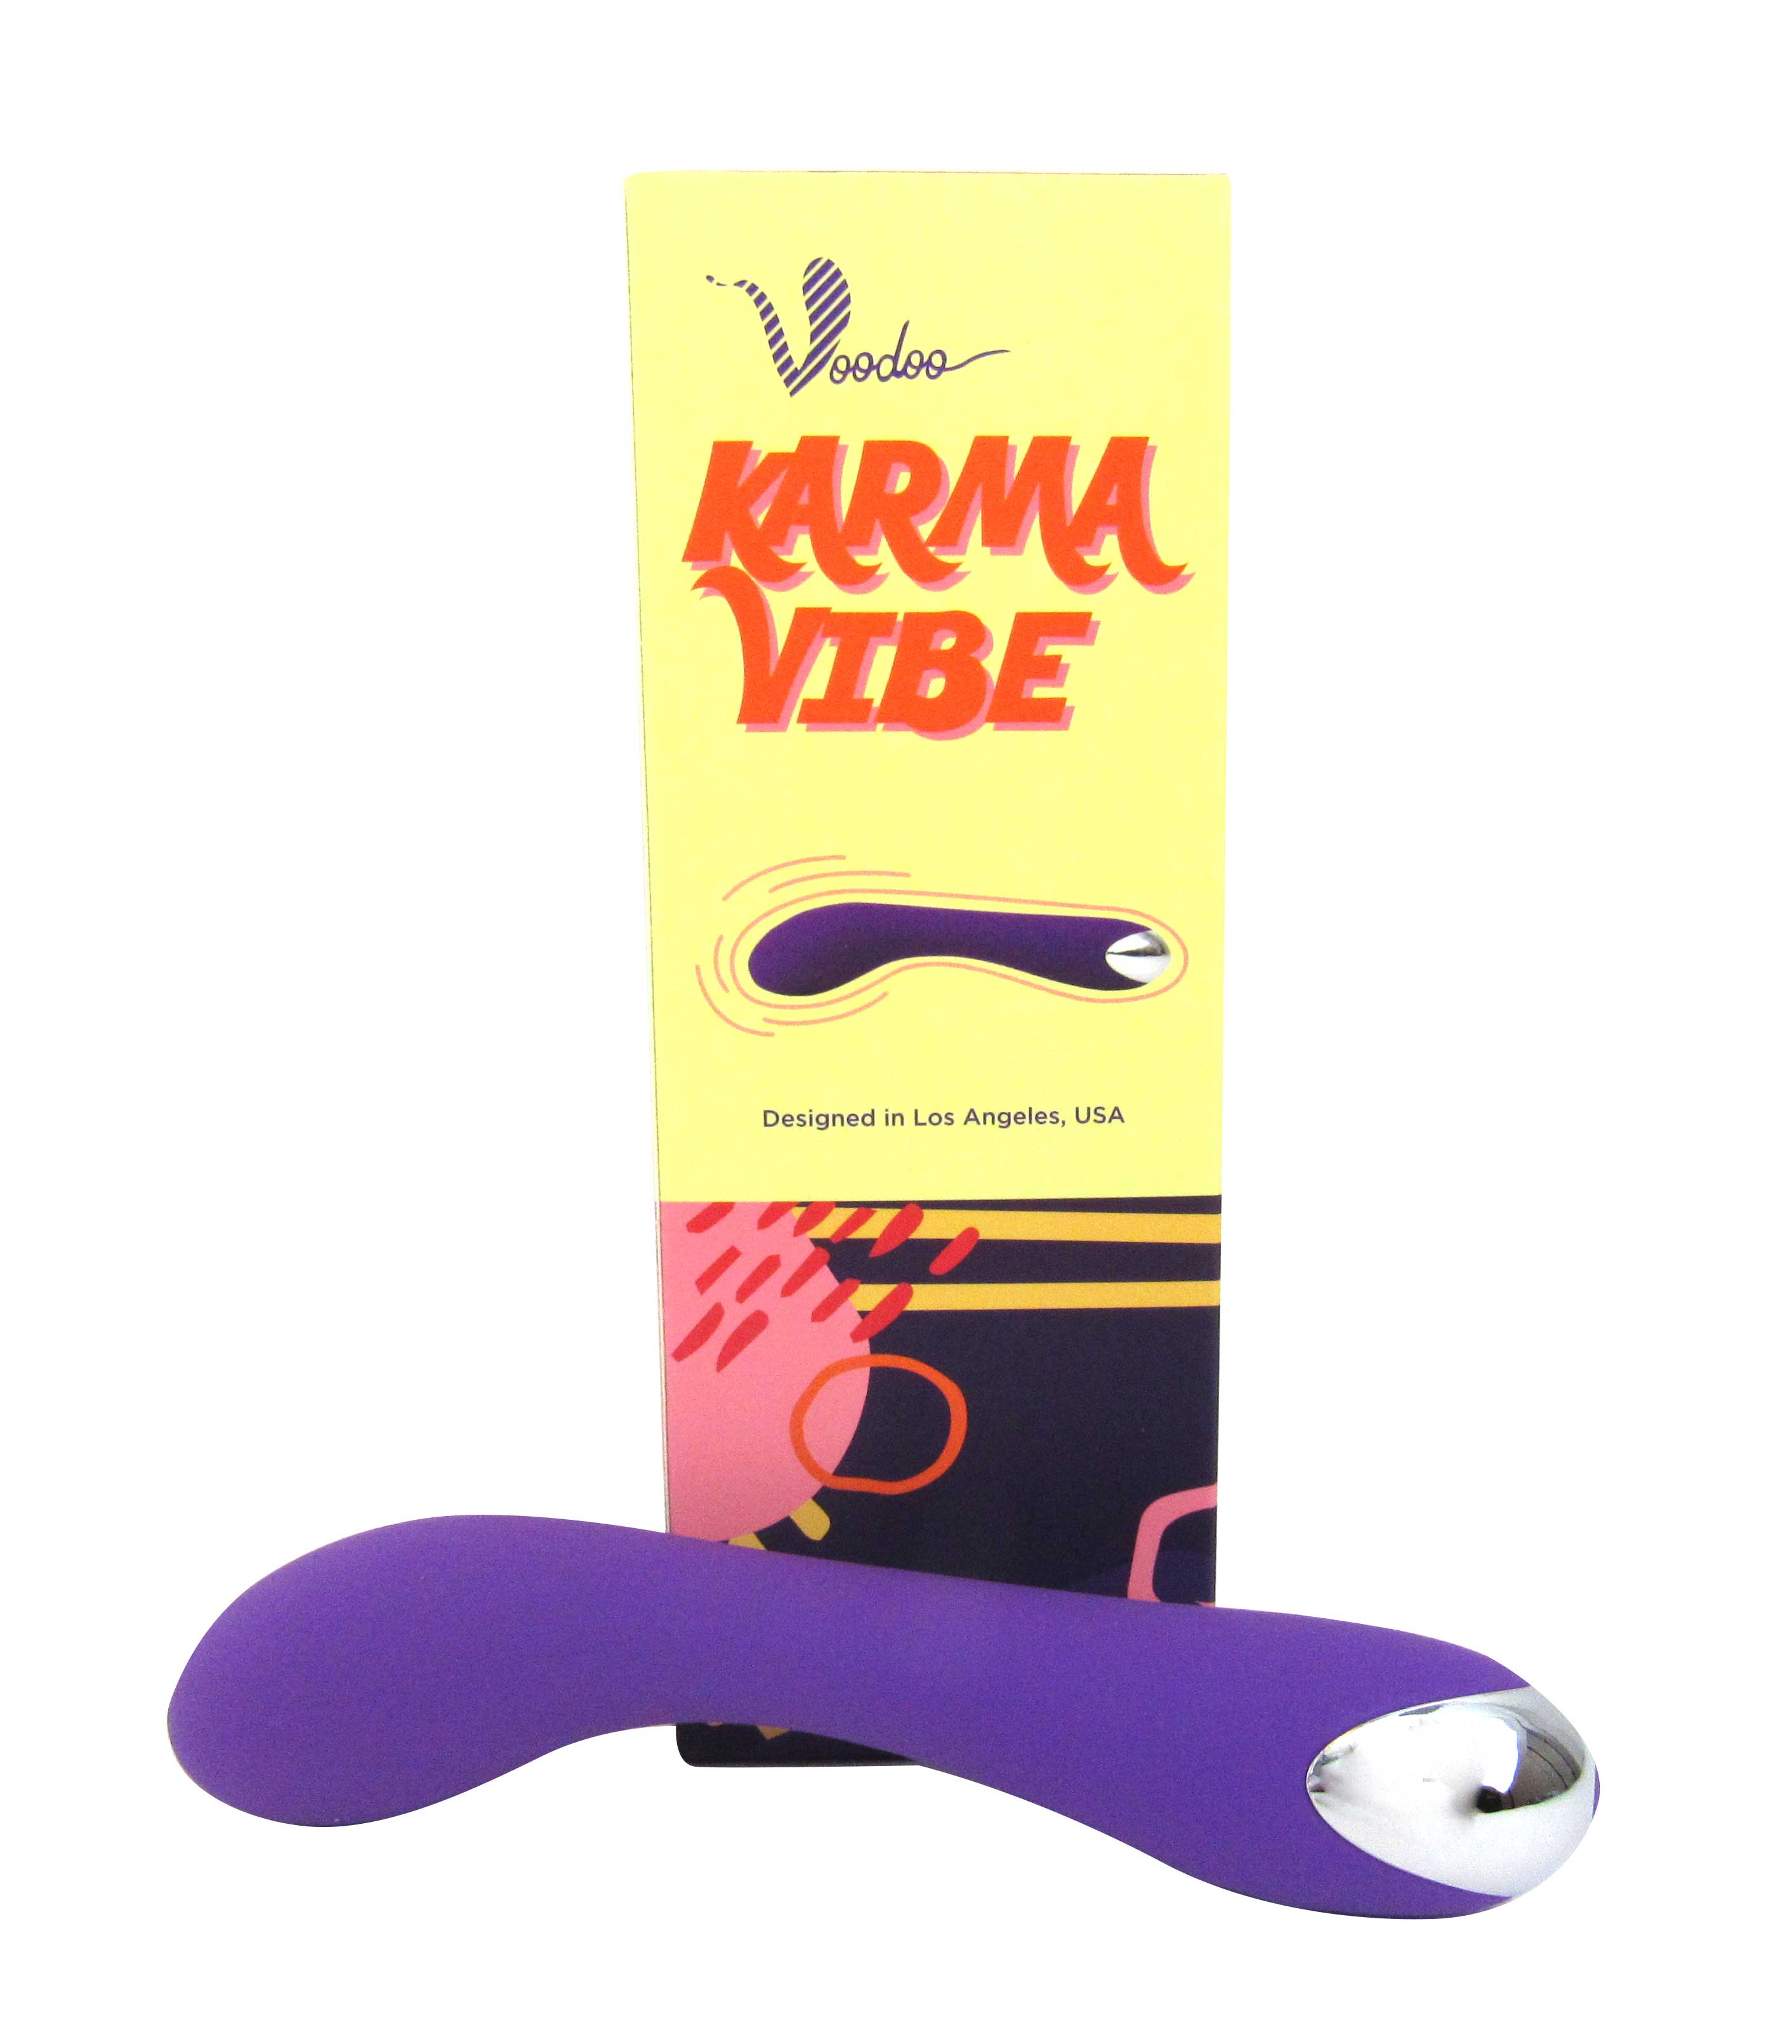 Shibari Voodoo Karma Vibe 10X Wireless Massager